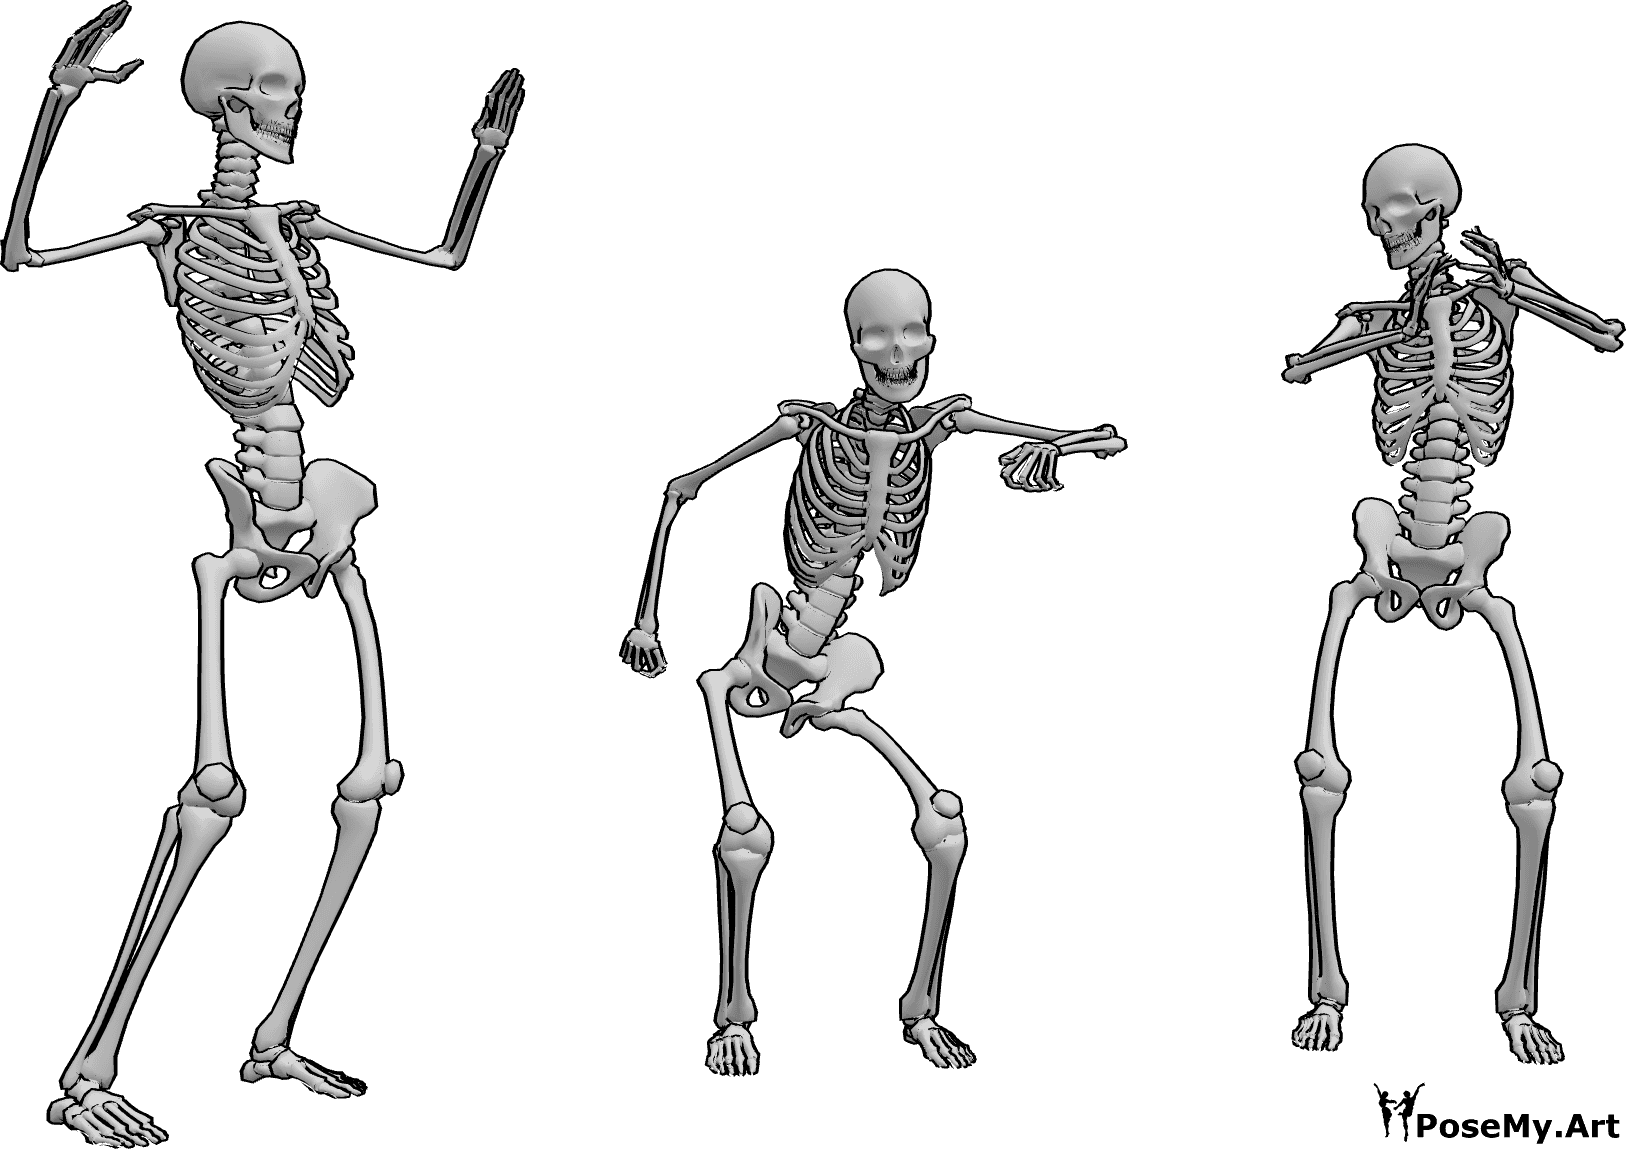 Pose Reference- Skeletons chicken dance pose - Three skeletons are dancing the chicken dance